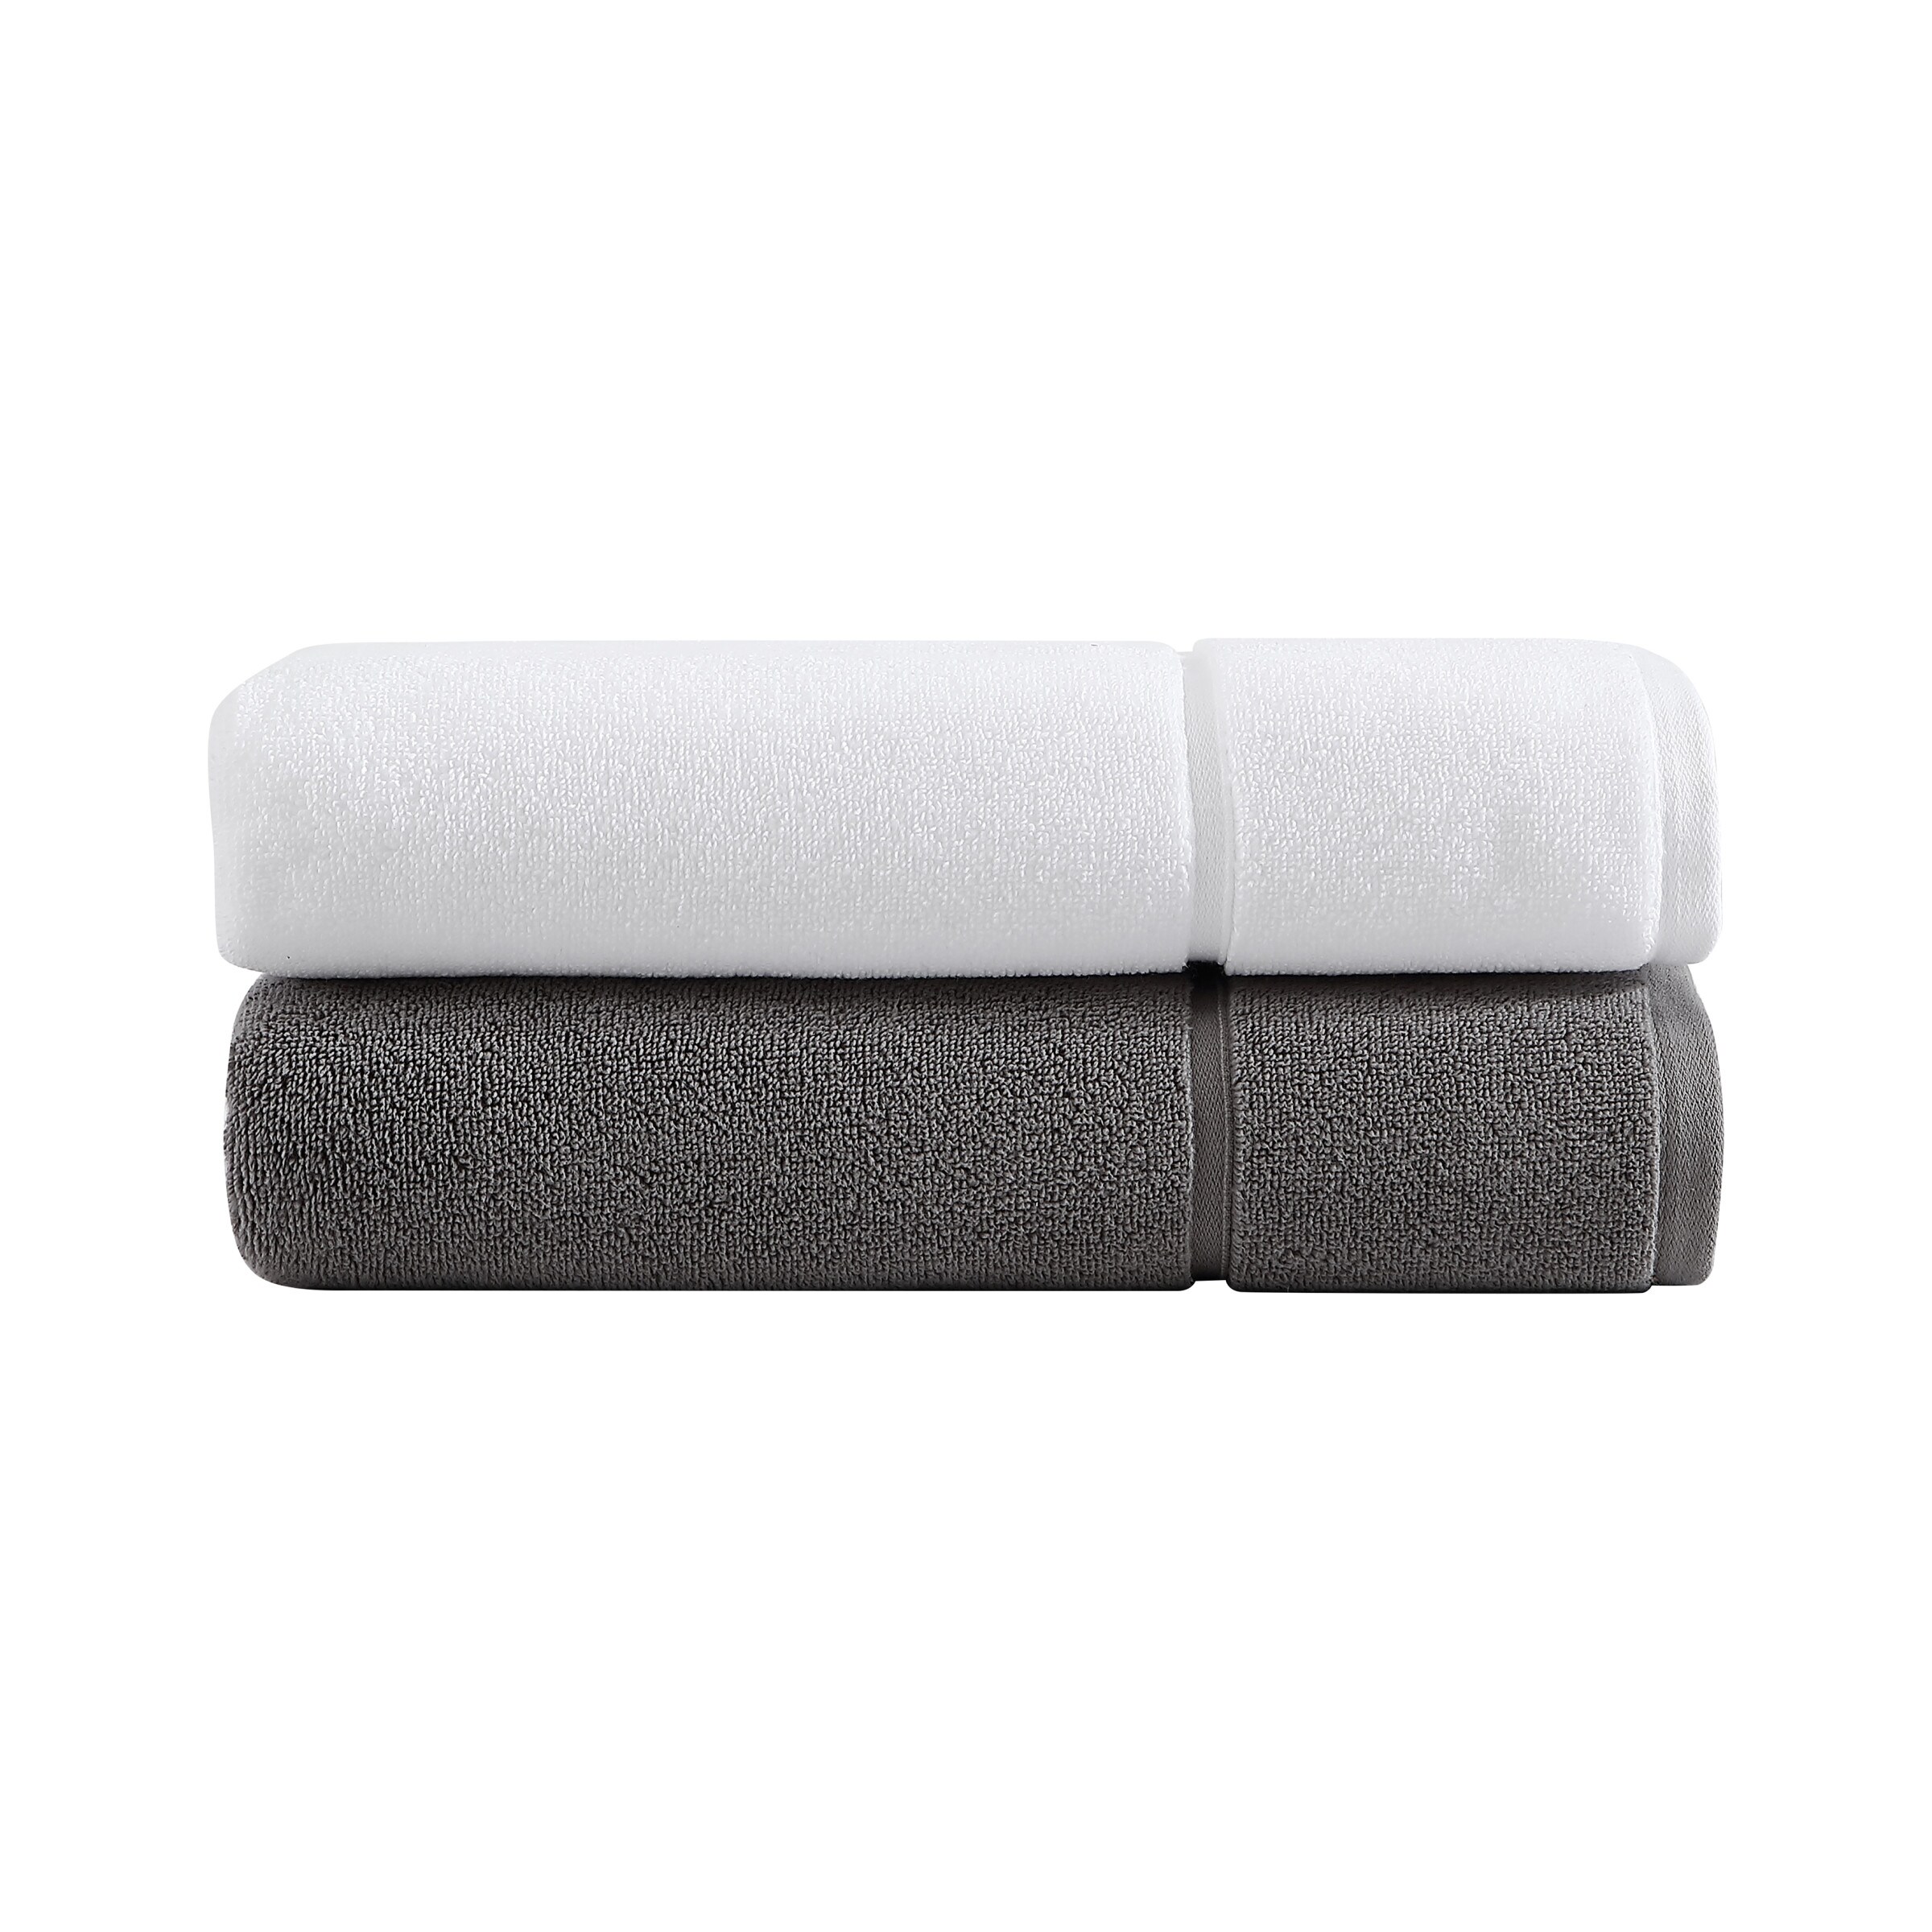 https://ak1.ostkcdn.com/images/products/is/images/direct/b3d2aebe167b28f34681b83bca02b01744d6888c/Vera-Wang-Modern-Lux-Cotton-6-Piece-Towel-Set.jpg